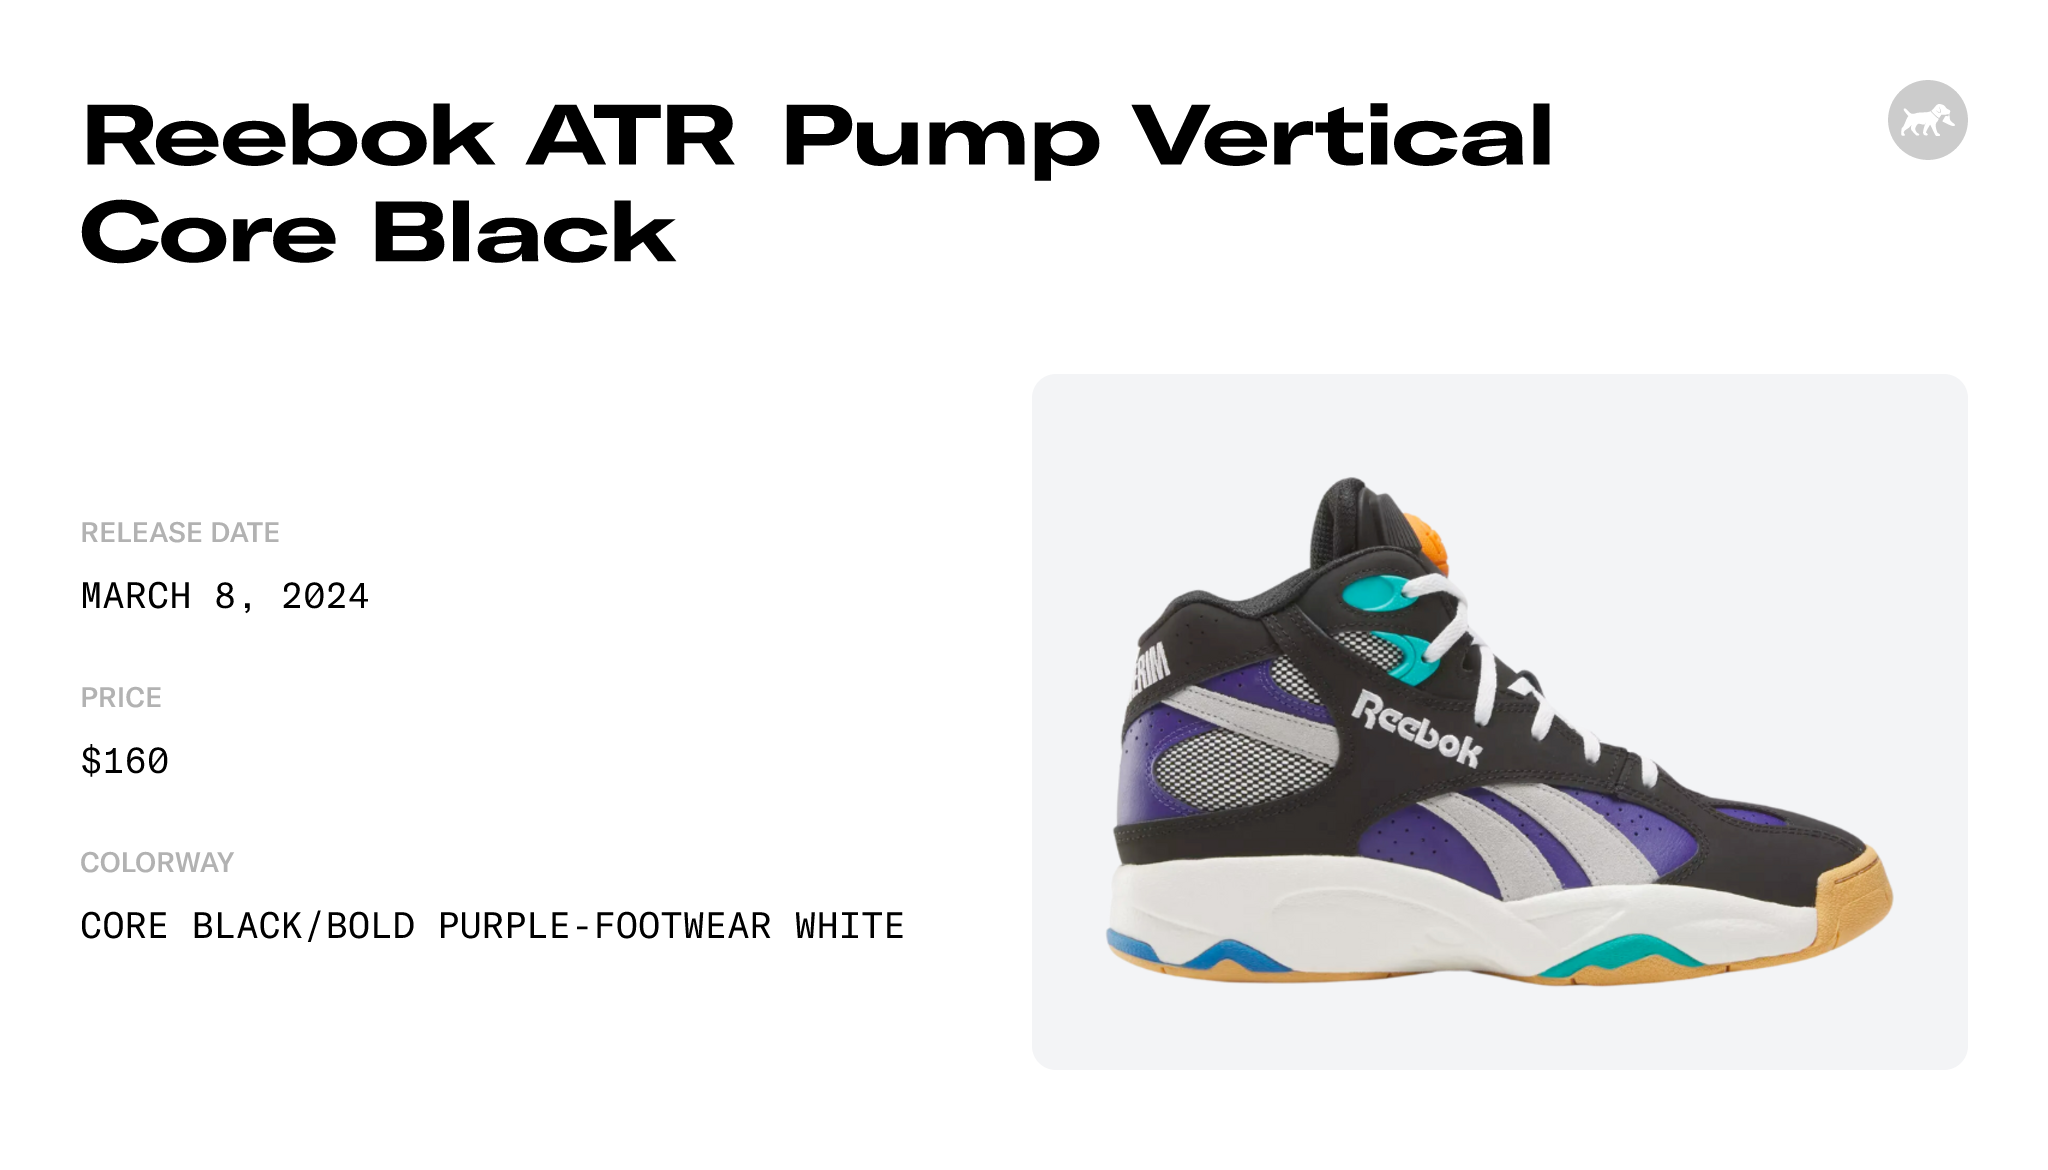 ATR Pump Vertical Basketball Shoes